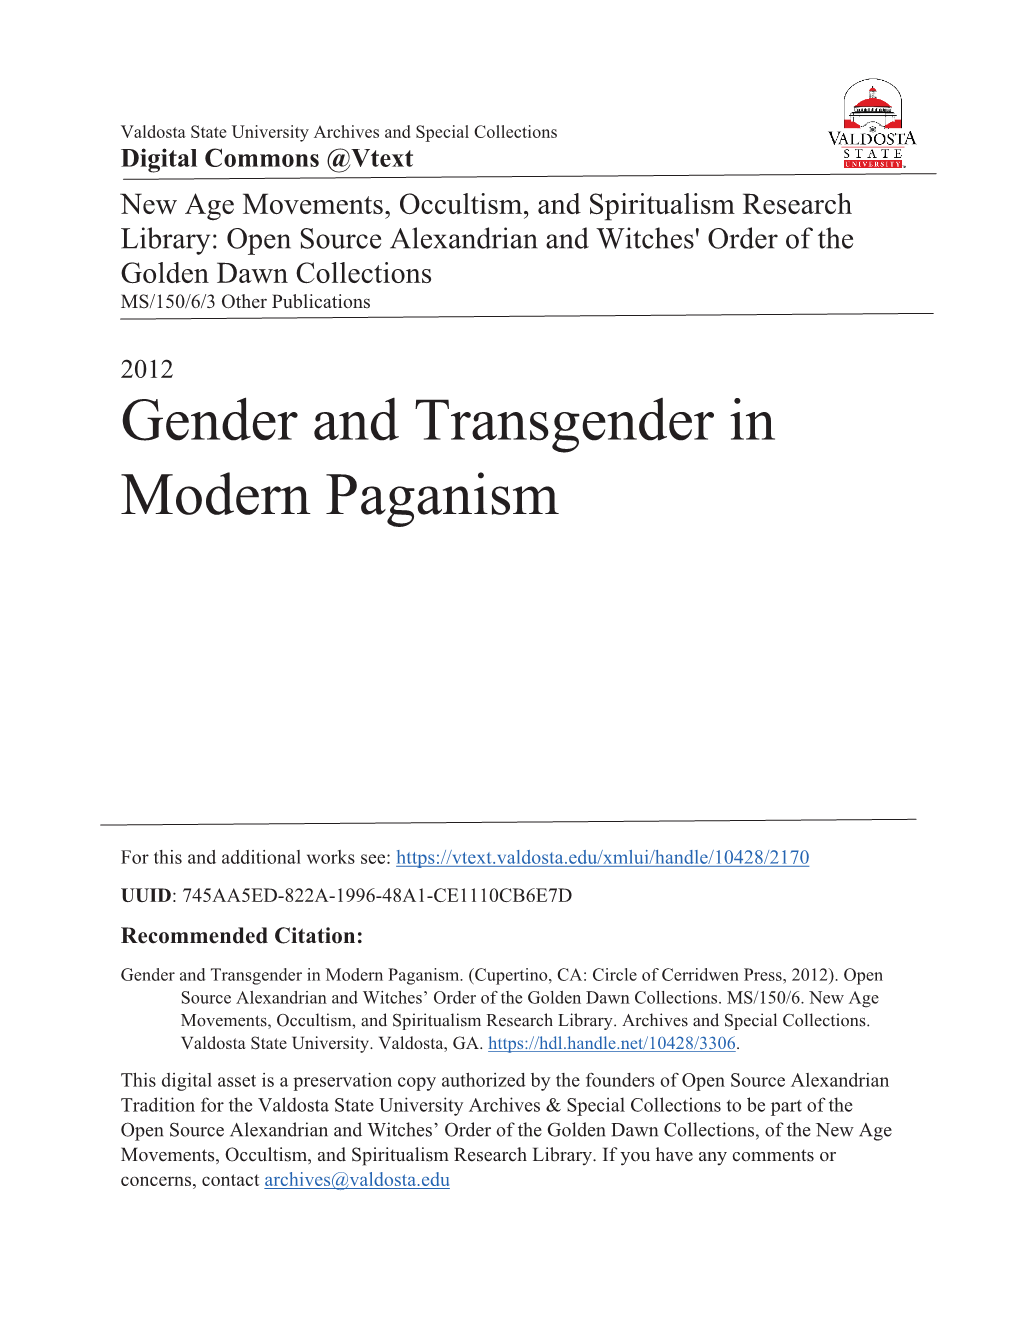 Gender and Transgender in Modern Paganism